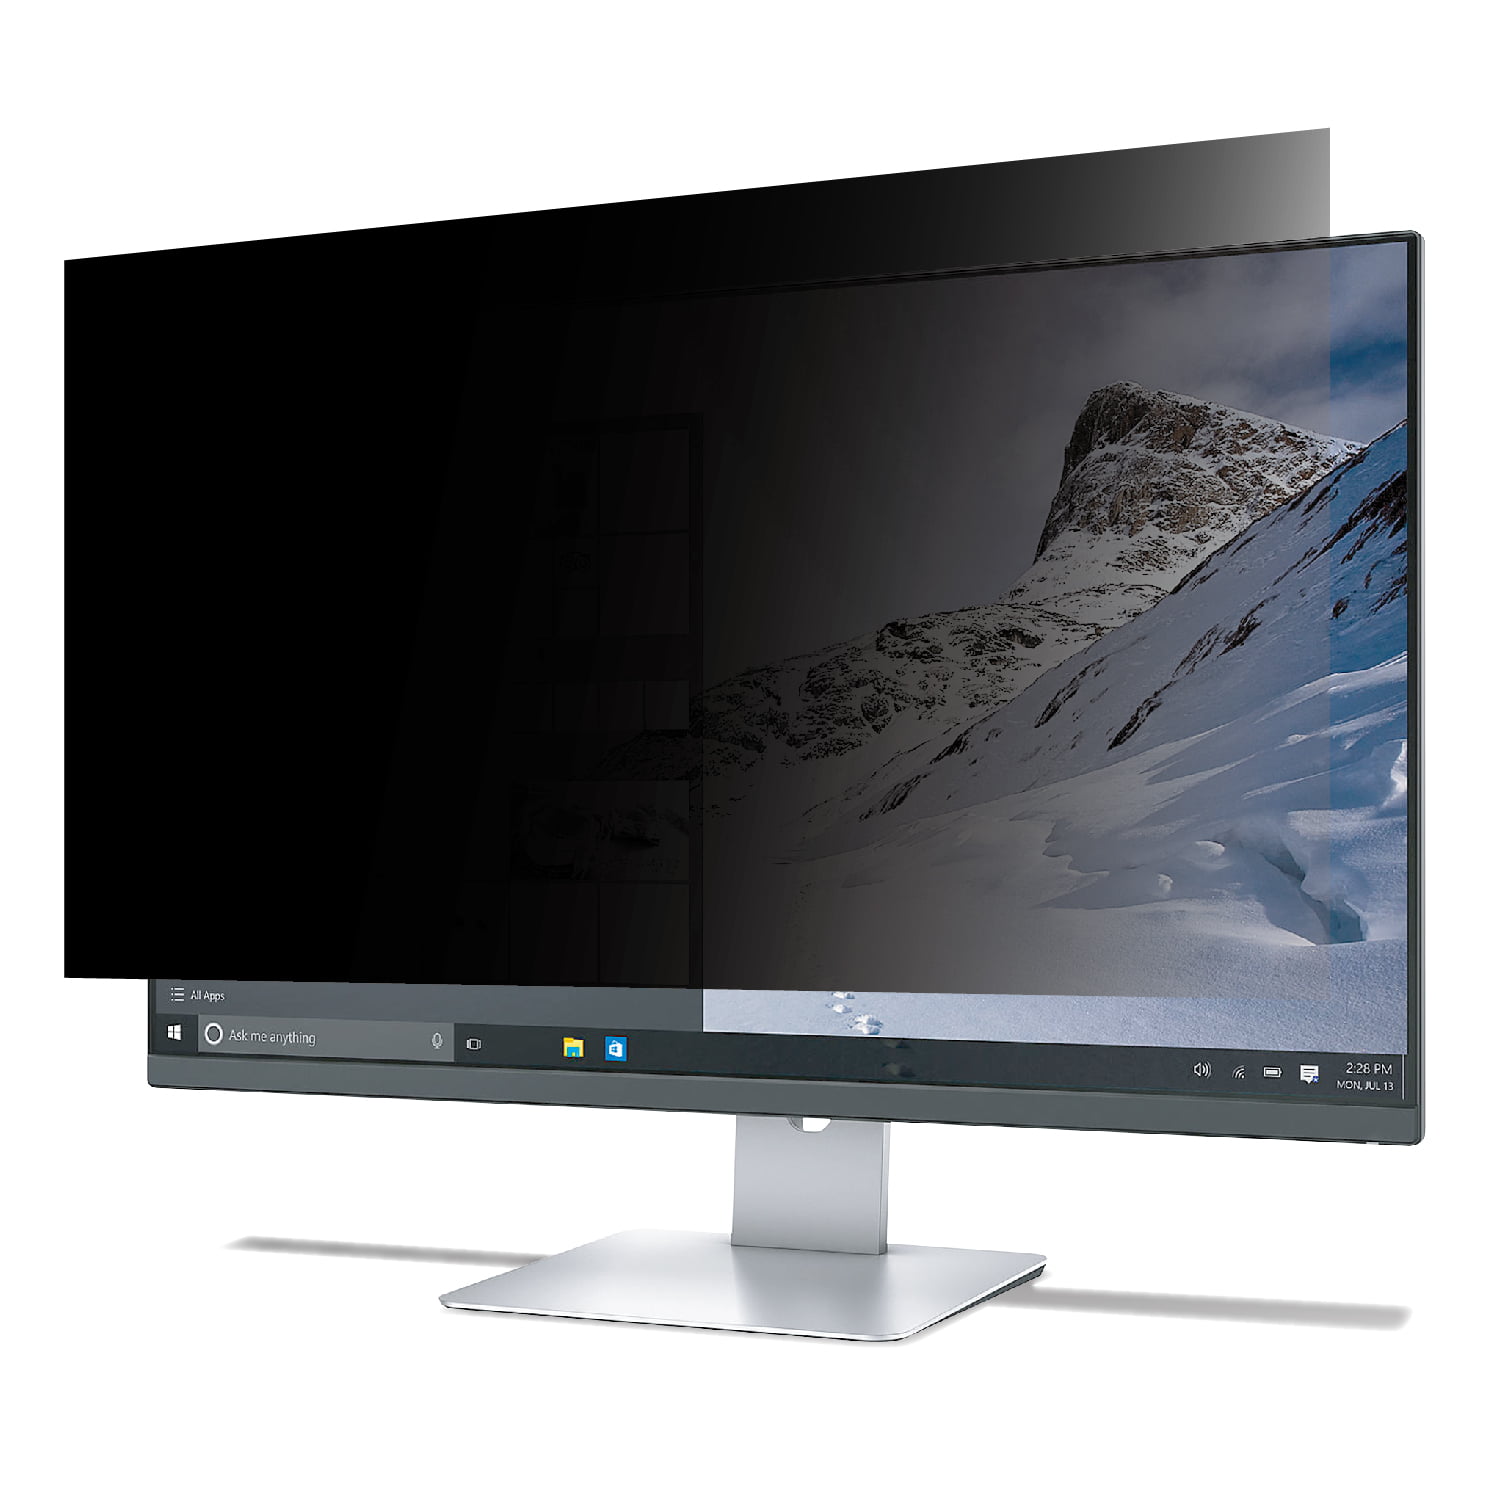 Caroki Privacy Screen Filter Anti-Glare Screen Protector for Laptop LCD LED Screen TFT Monitor 15.6 inch Removable Desktop PC